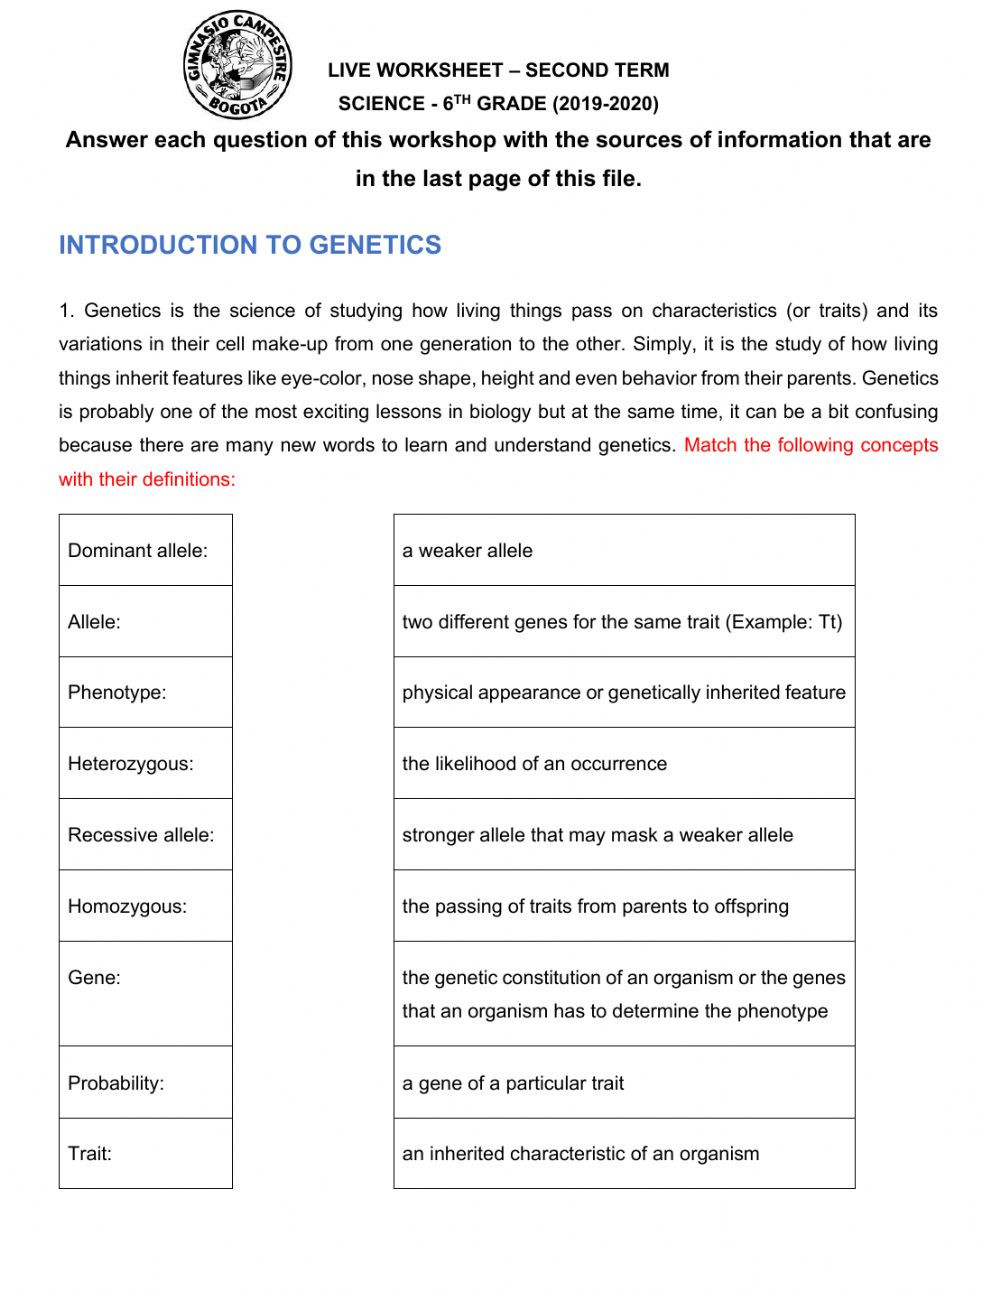 Mendelian Genetics Worksheet Answers Genetics Mendelian Genetics Interactive Worksheet